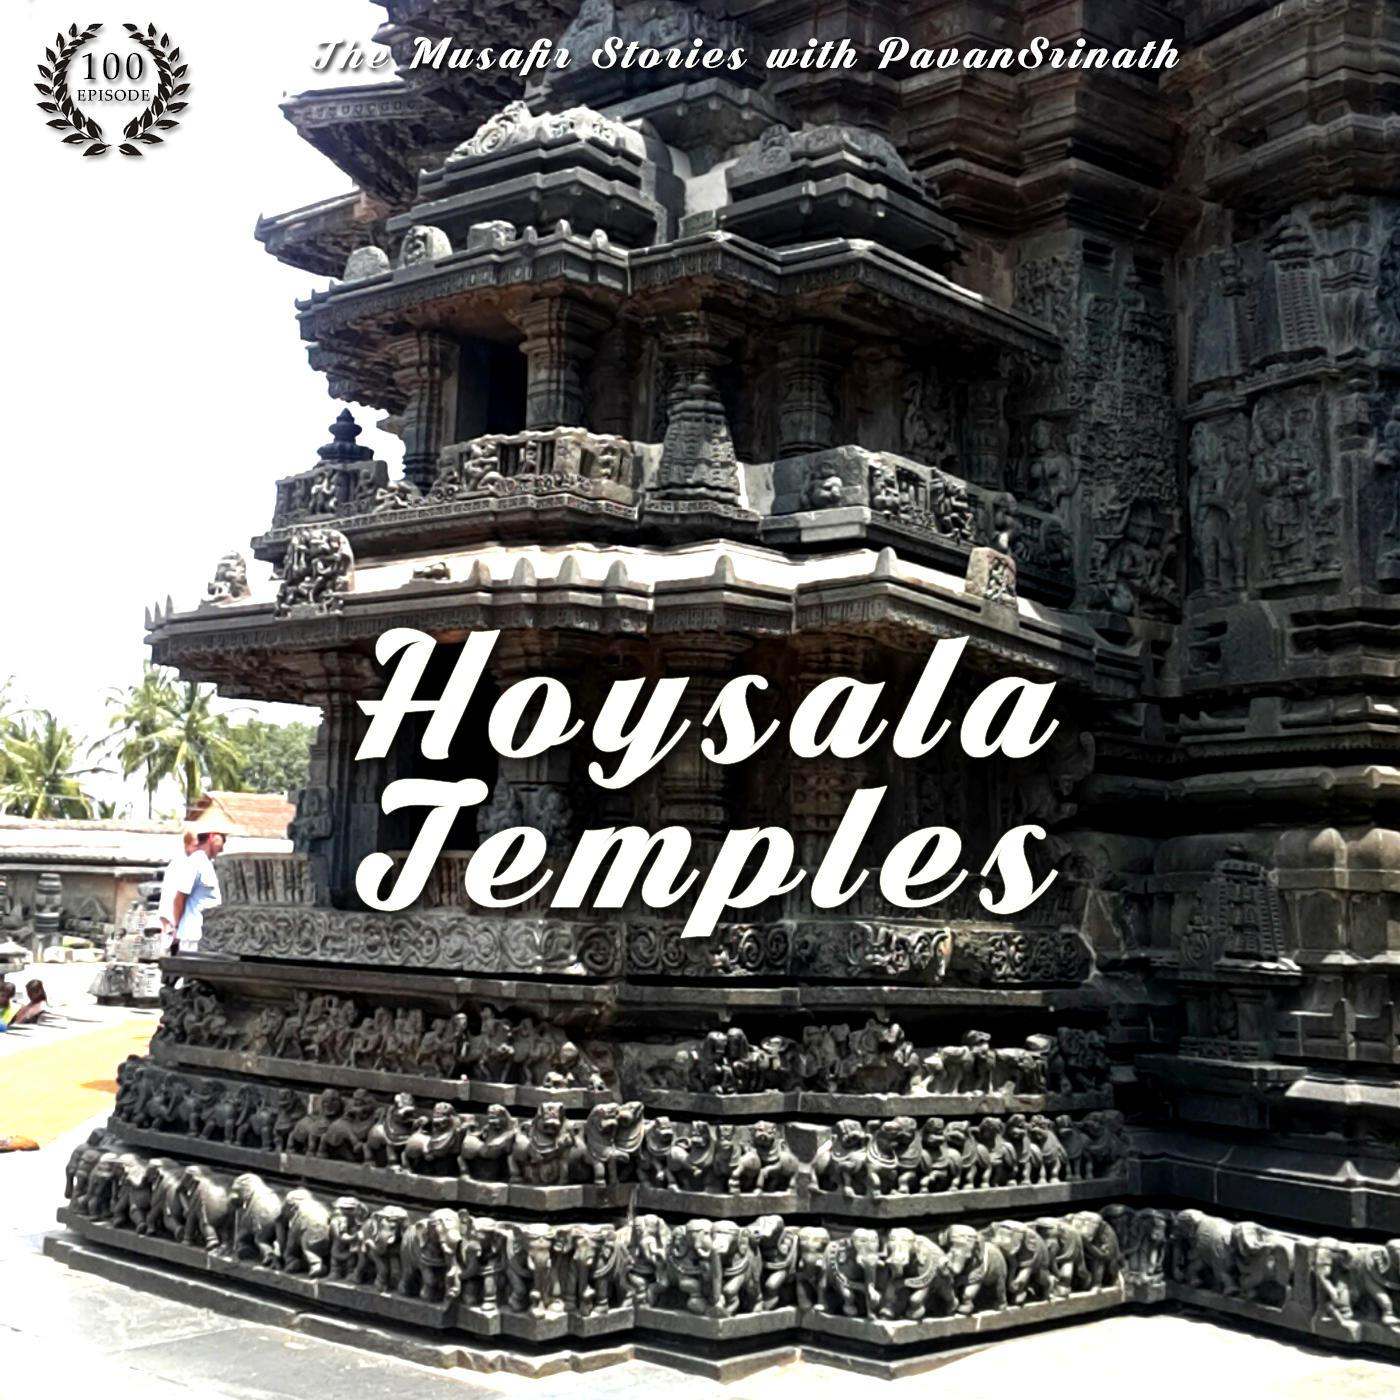 100: Hoysala Temples with Pavan Srinath